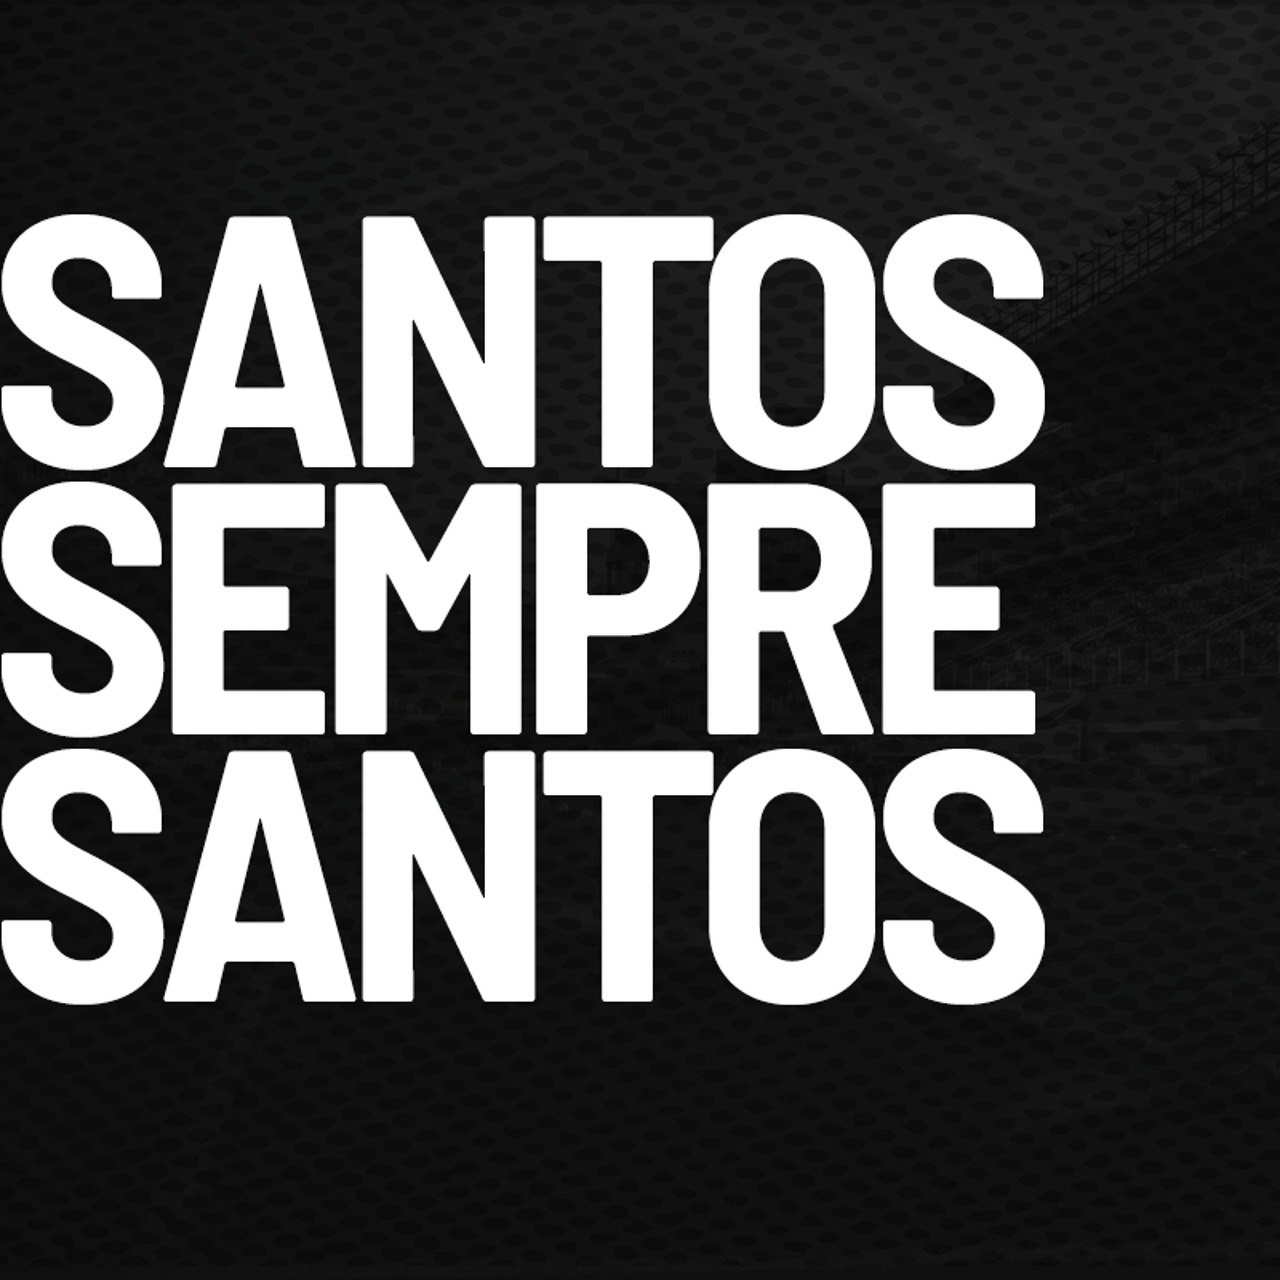 Option B: Santos Sempre Santos